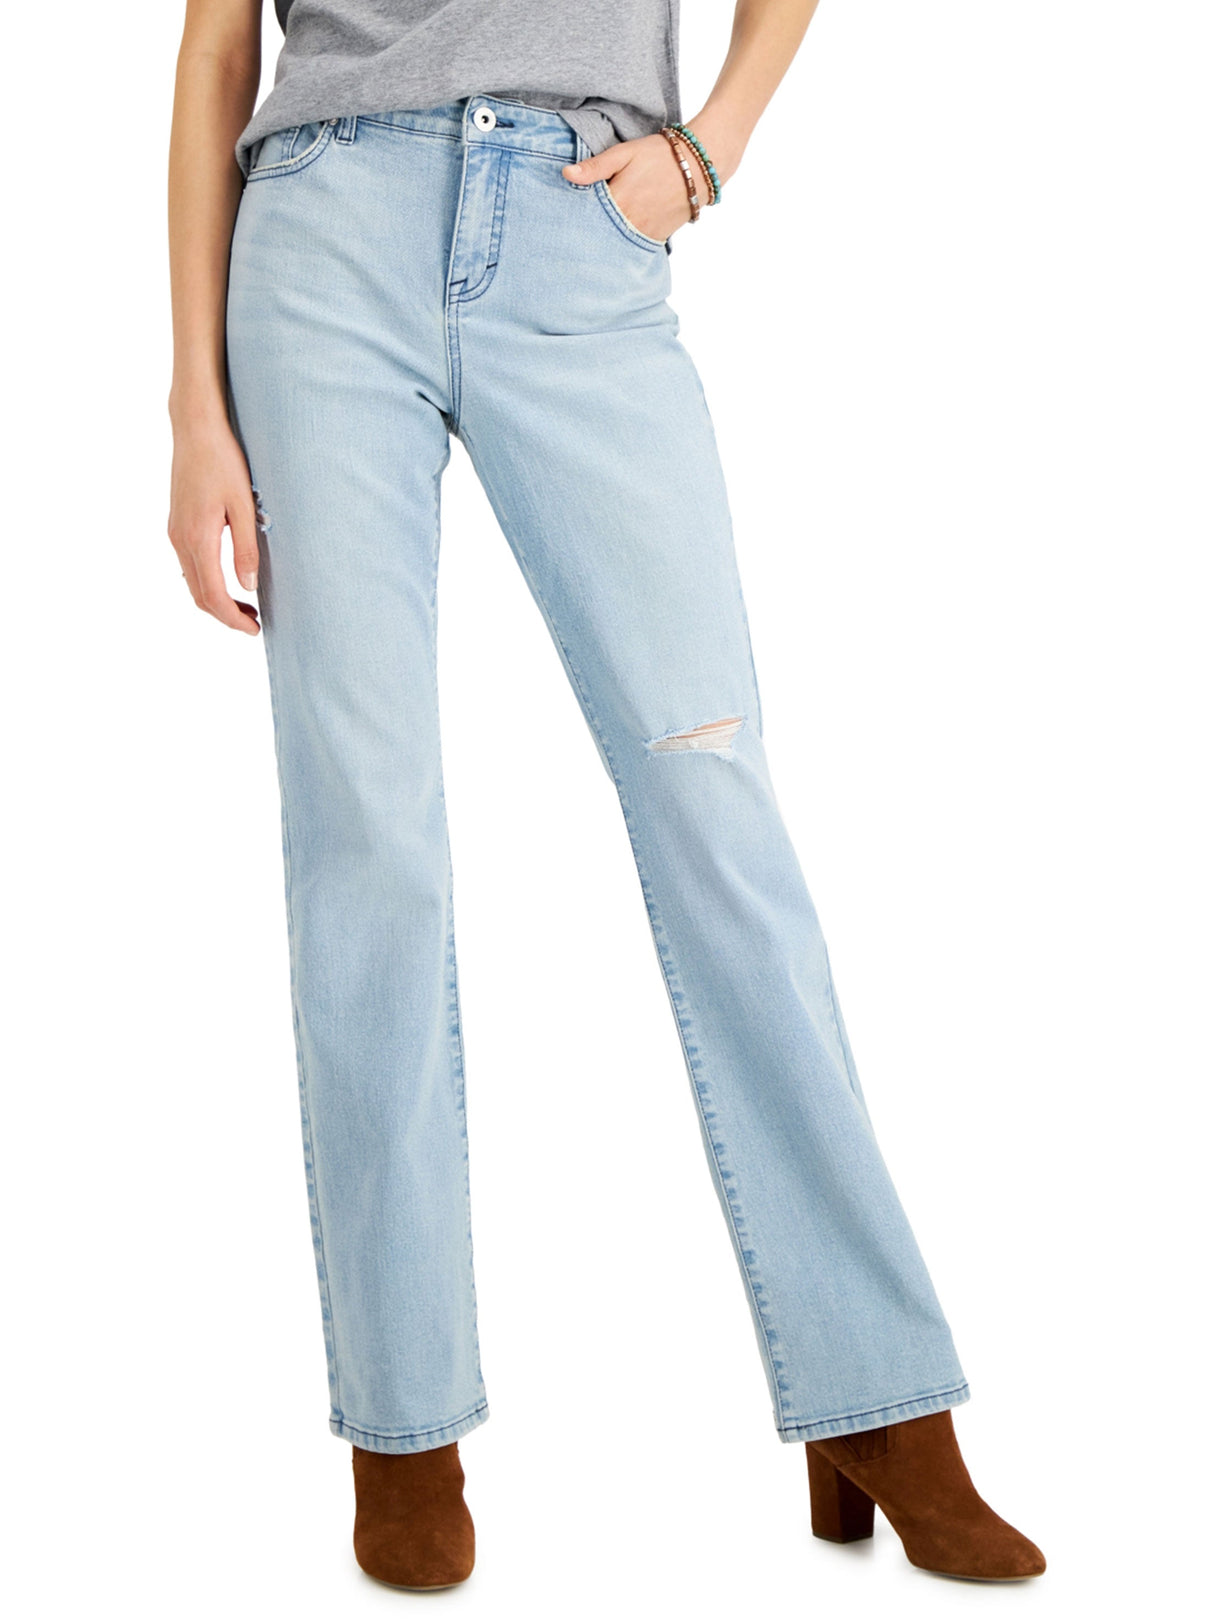 Image for Women's Little Ripped Jeans,Light Blue